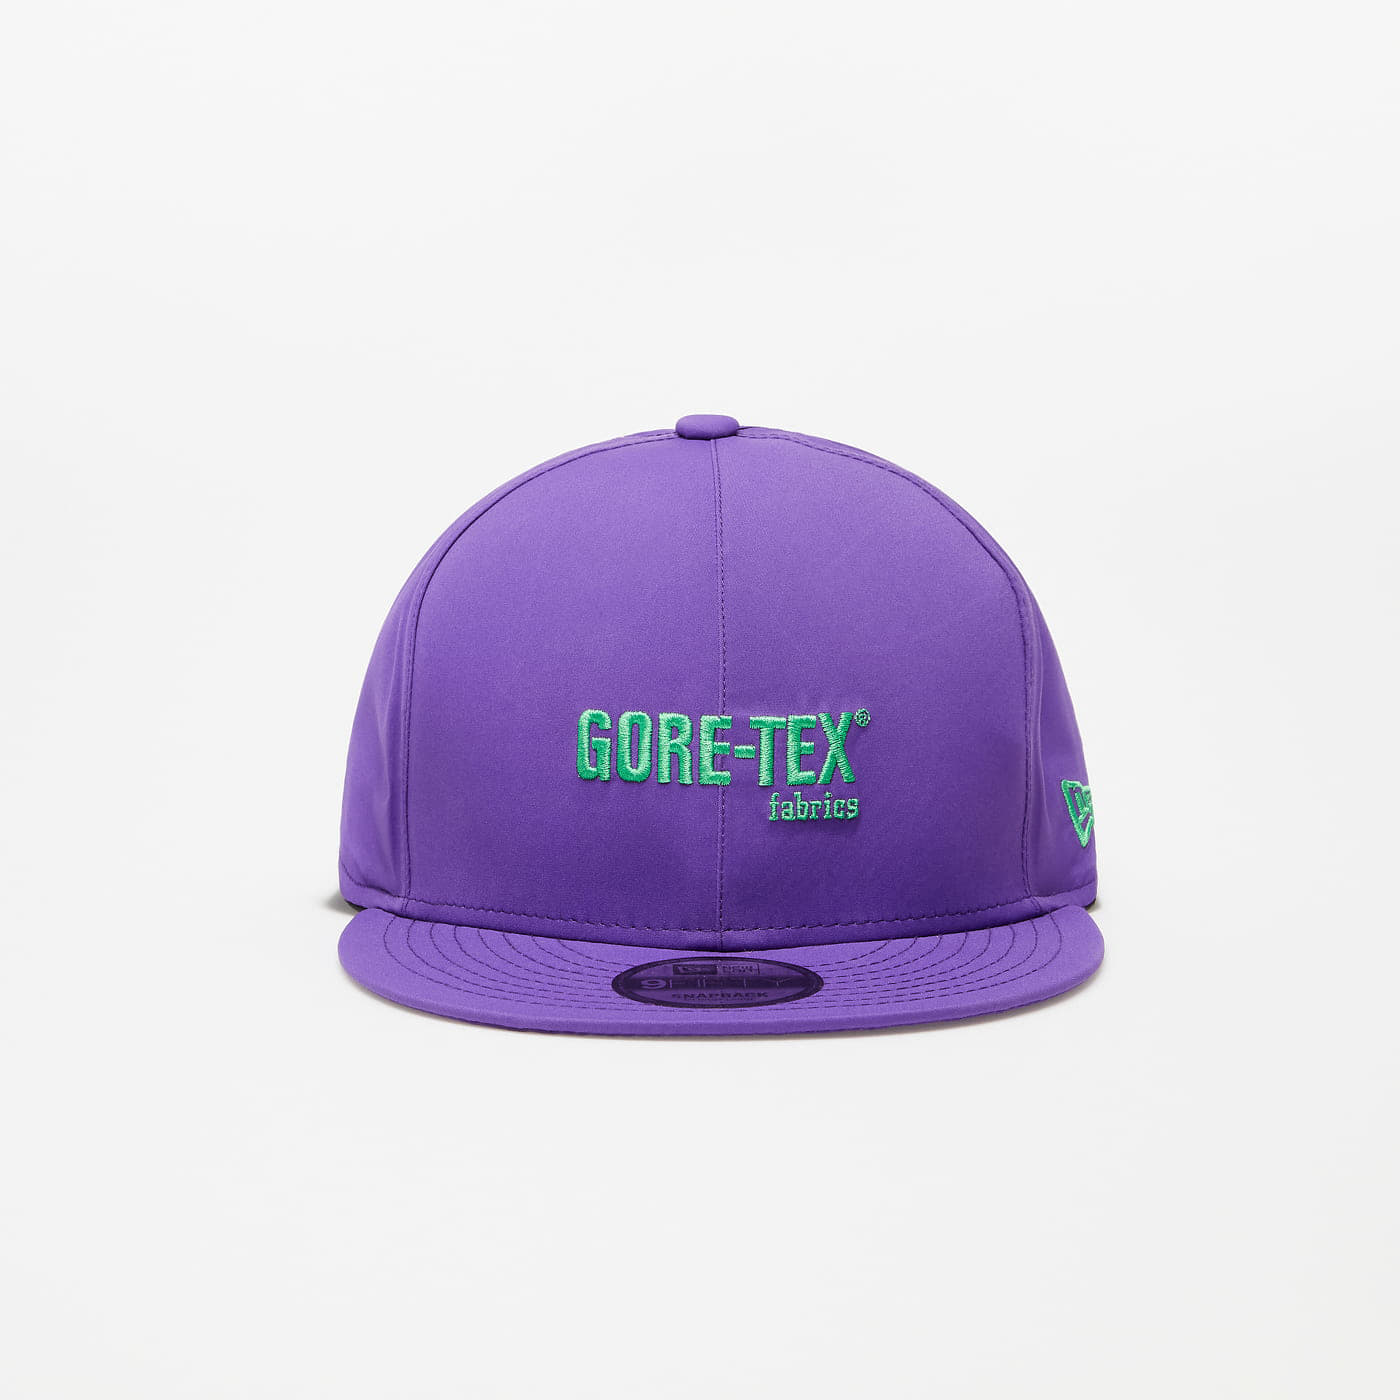 Caps New Era Gore-Tex Purple 9FIFTY Snapback Cap Purple